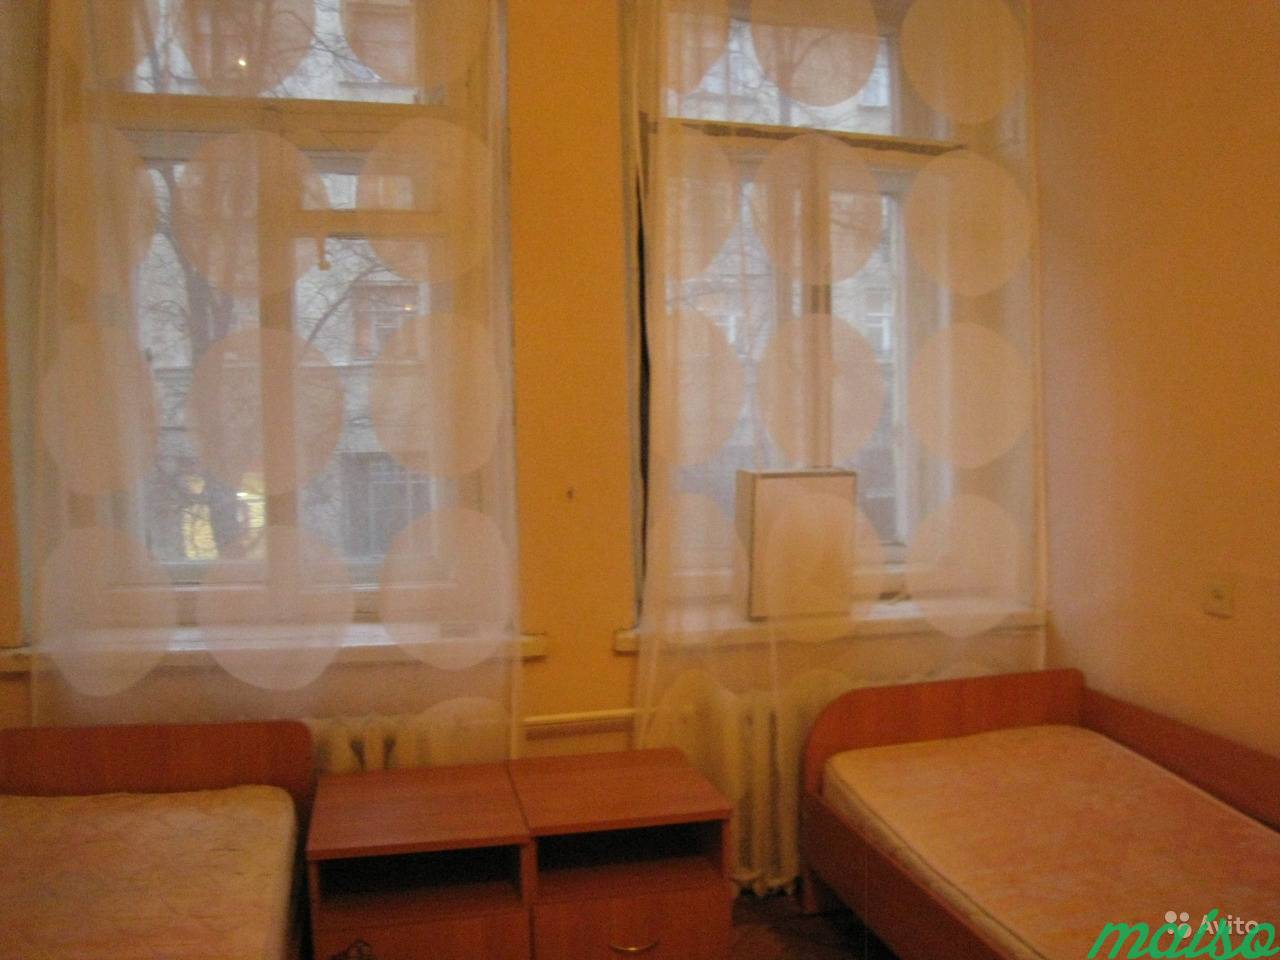 Комната 18 м² в 5-к, 2/5 эт. в Санкт-Петербурге. Фото 5